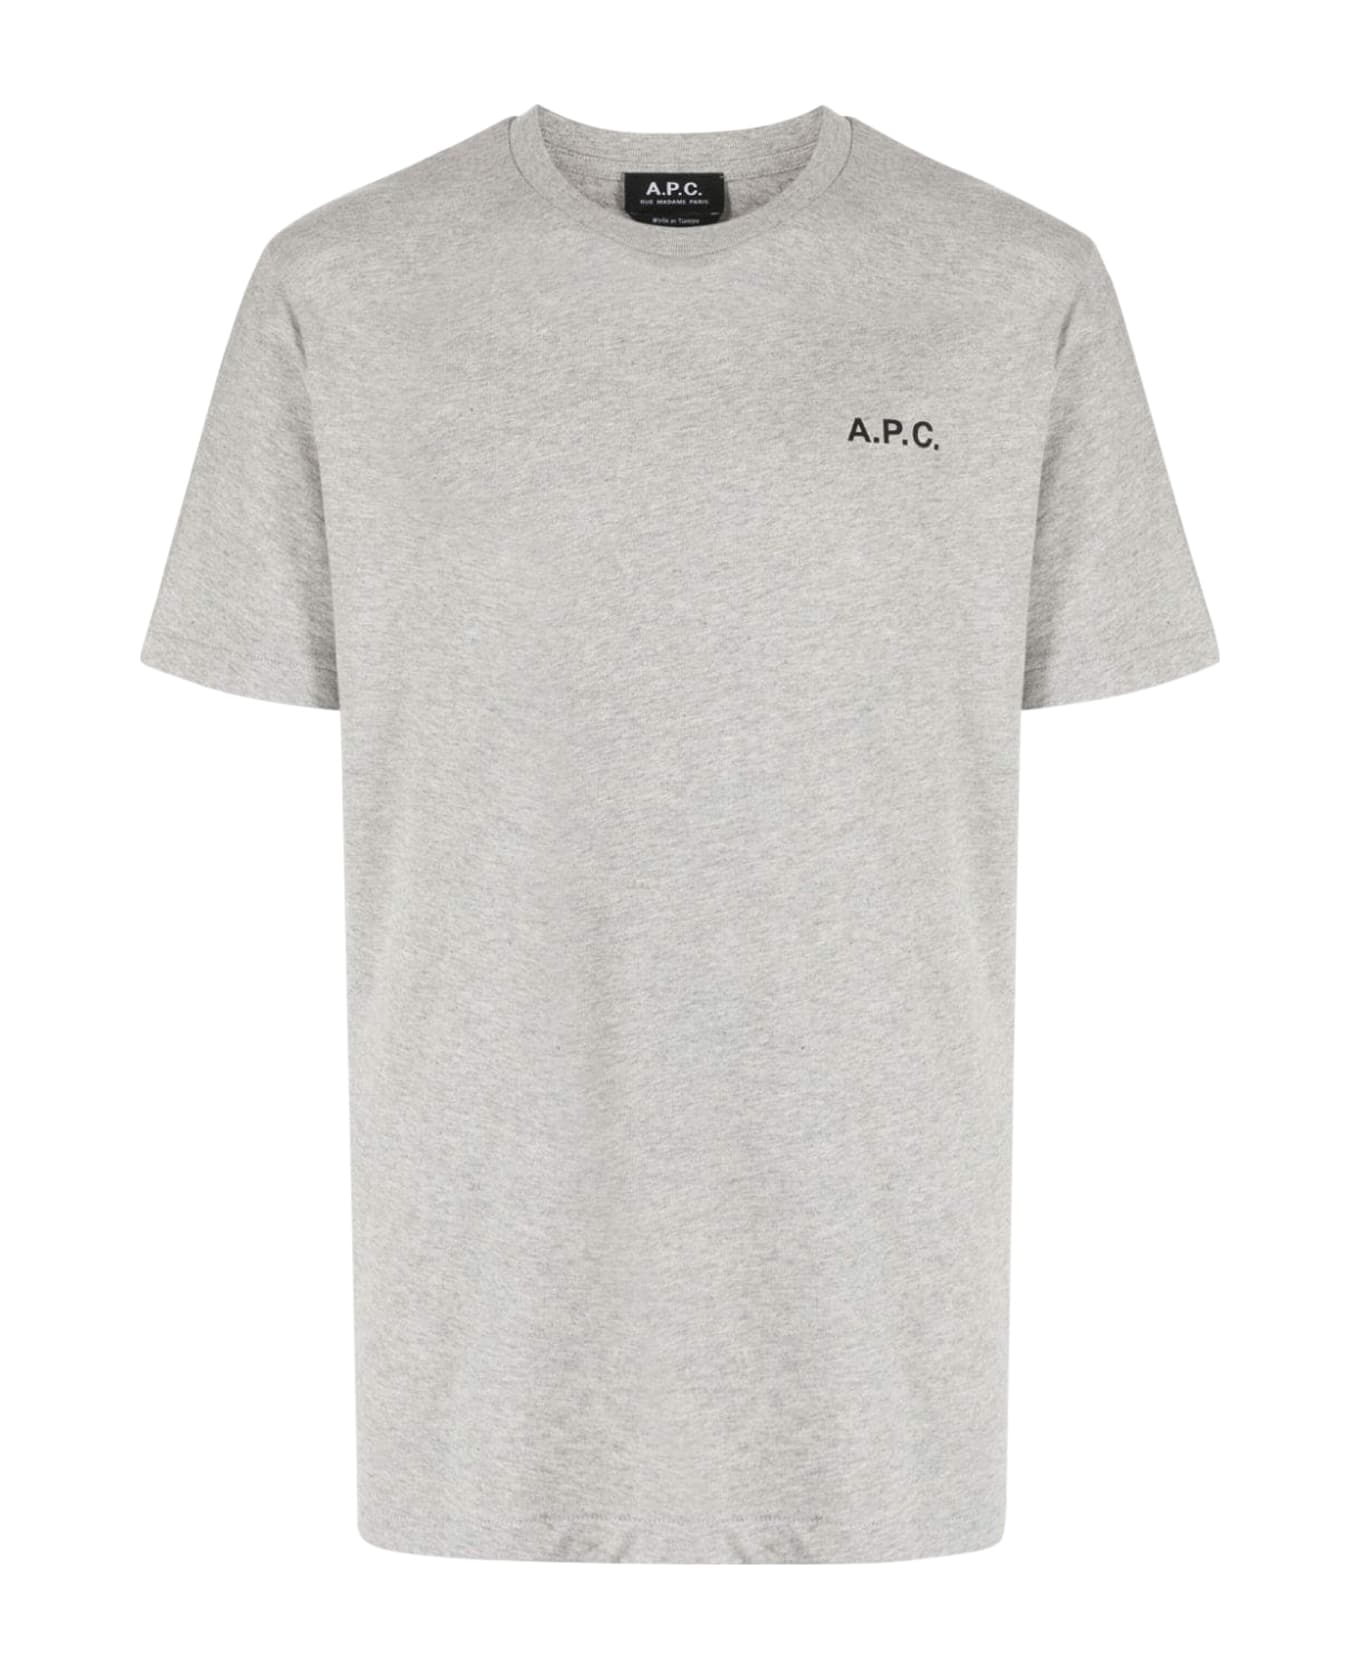 A.P.C. T-shirt Wave - Plb Heathered Light Grey シャツ